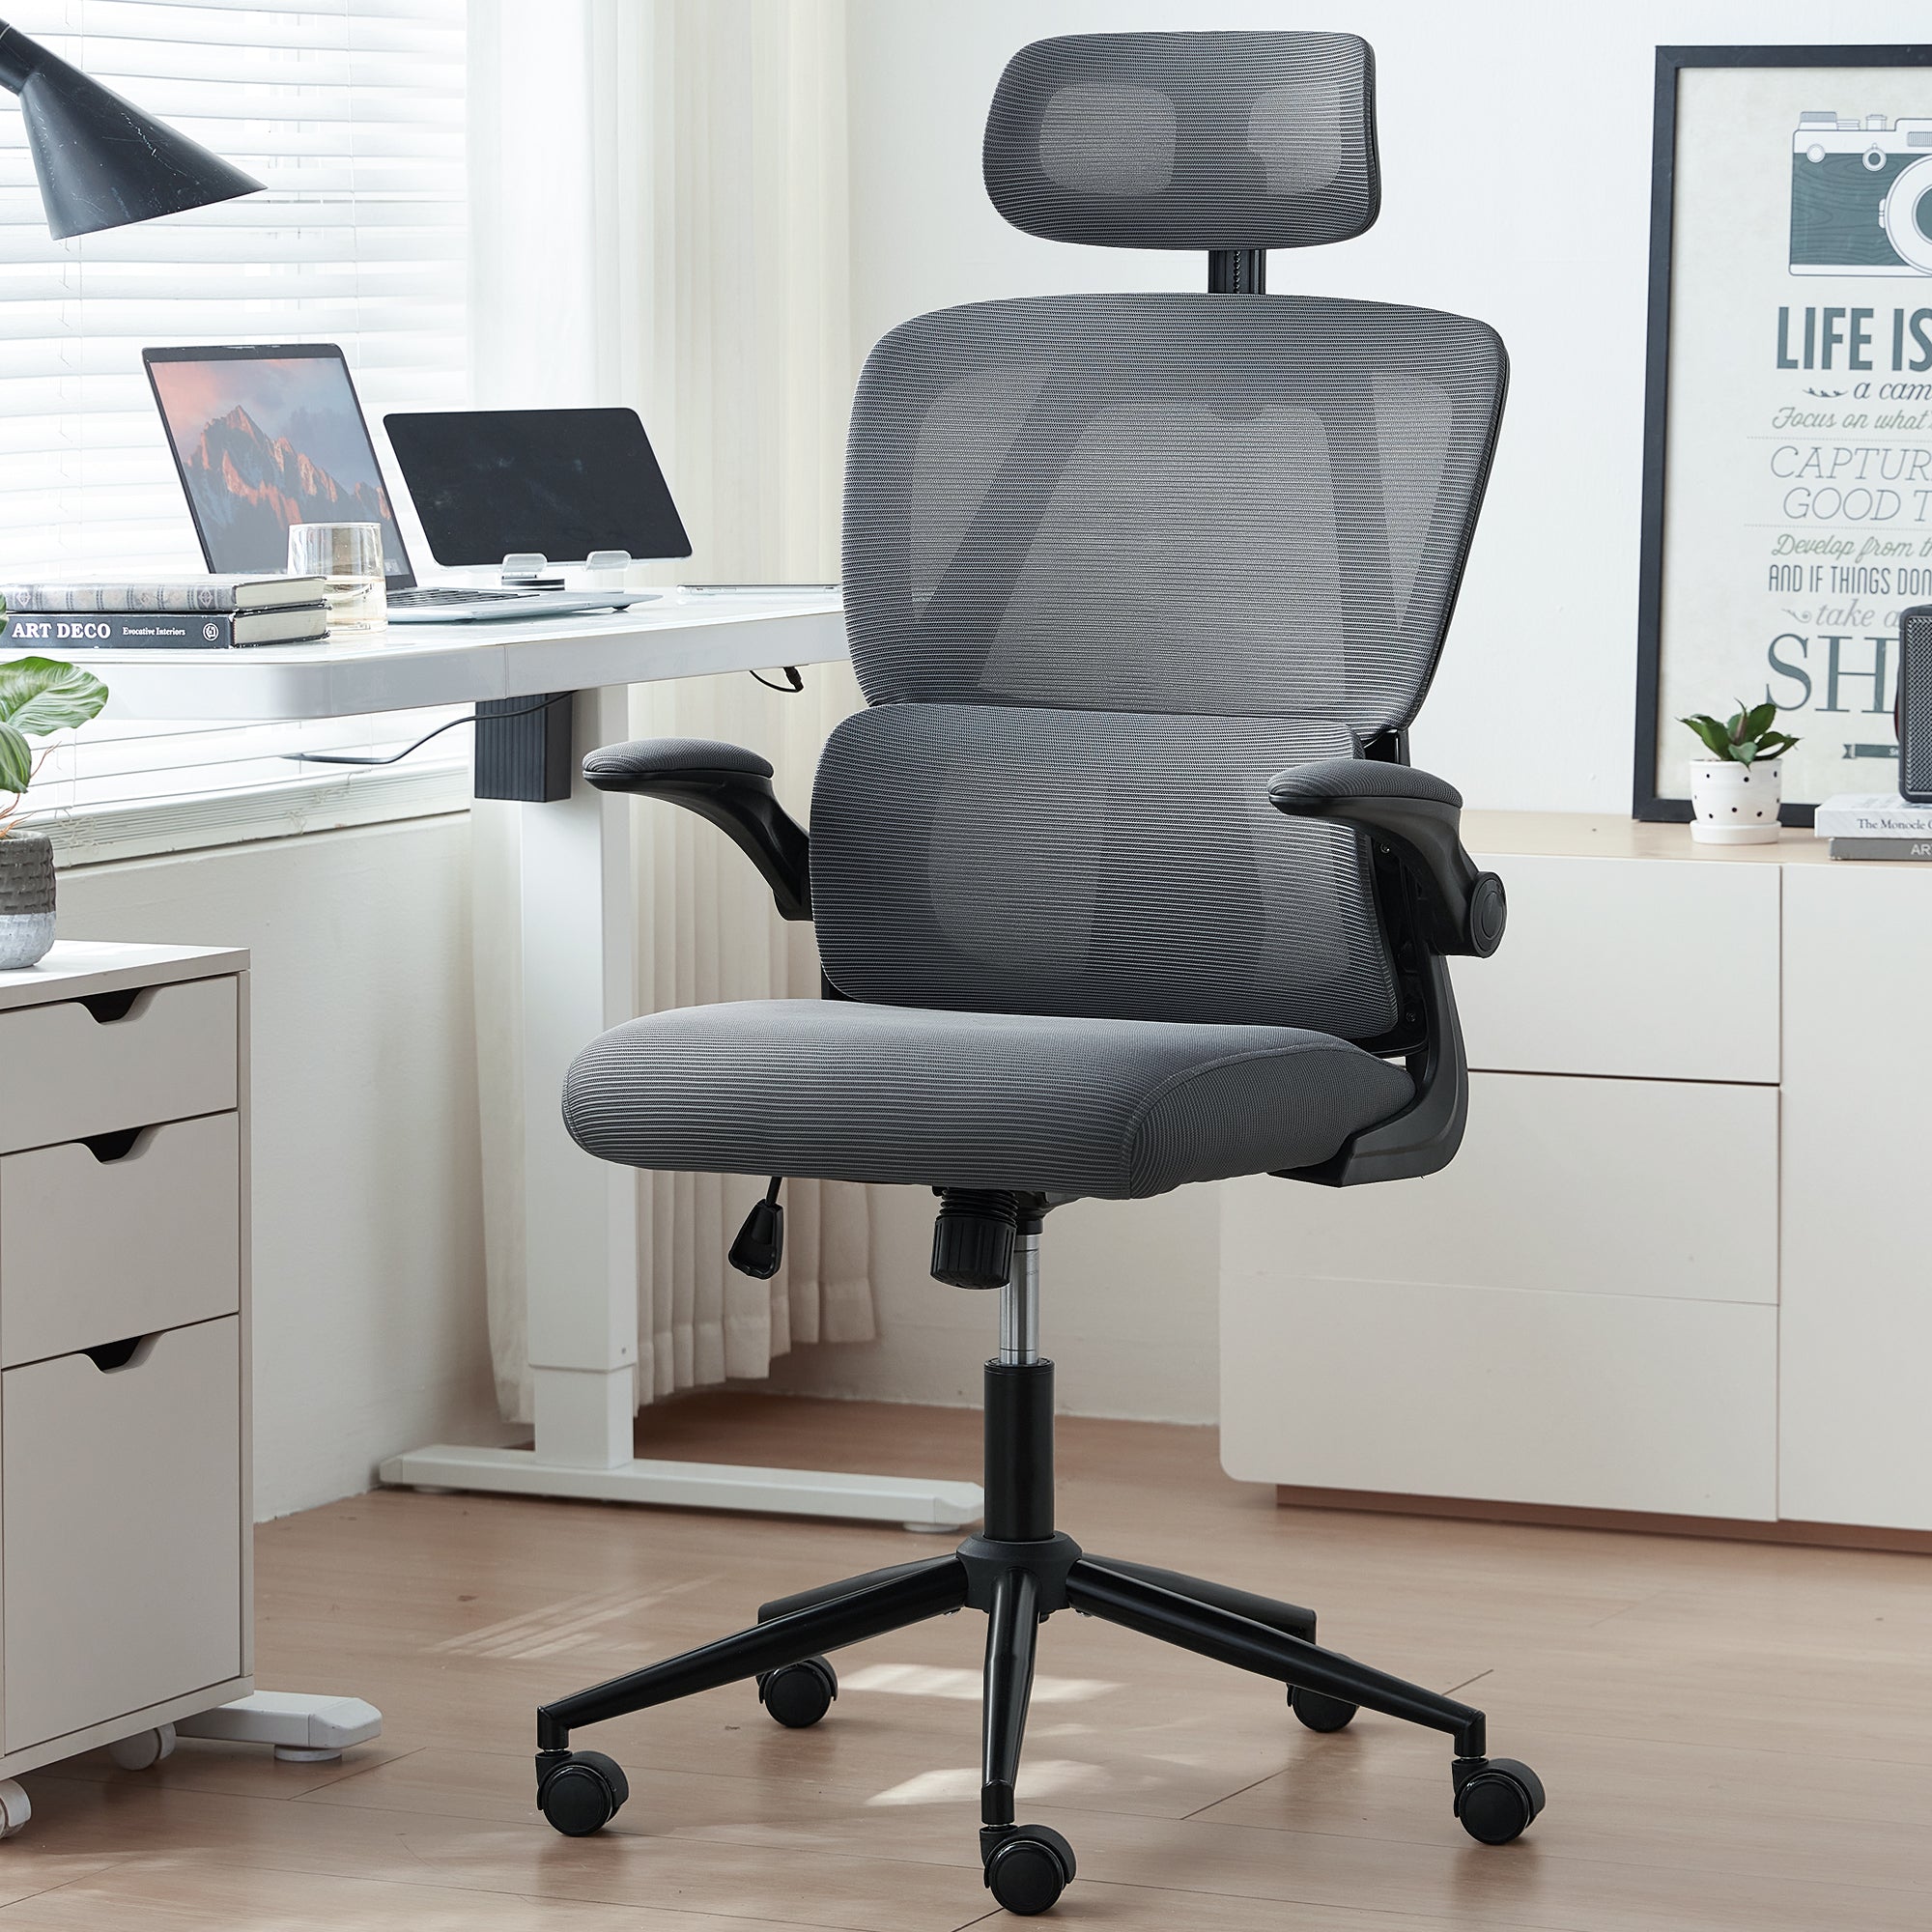 Ovios Office Chair, Ergonomic High Back,Lumbar Support